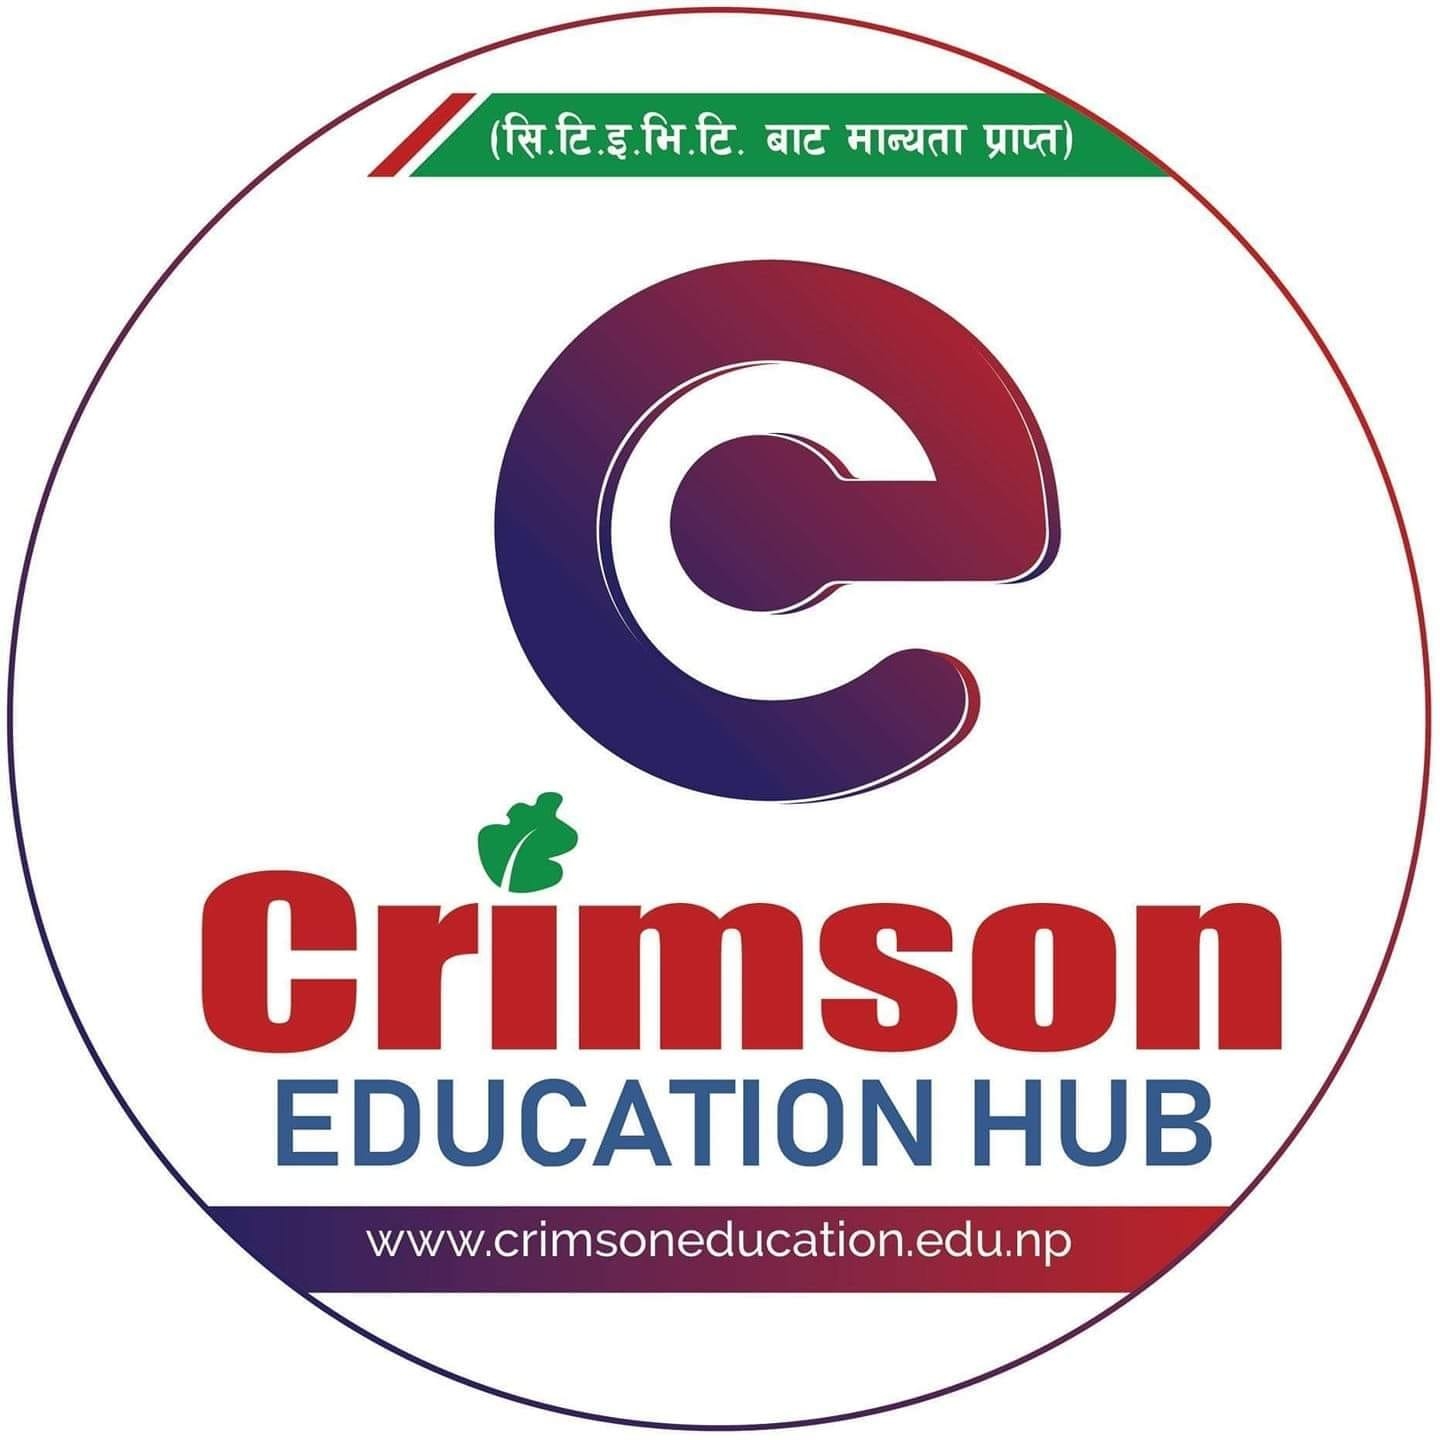 Crimson Education Hub